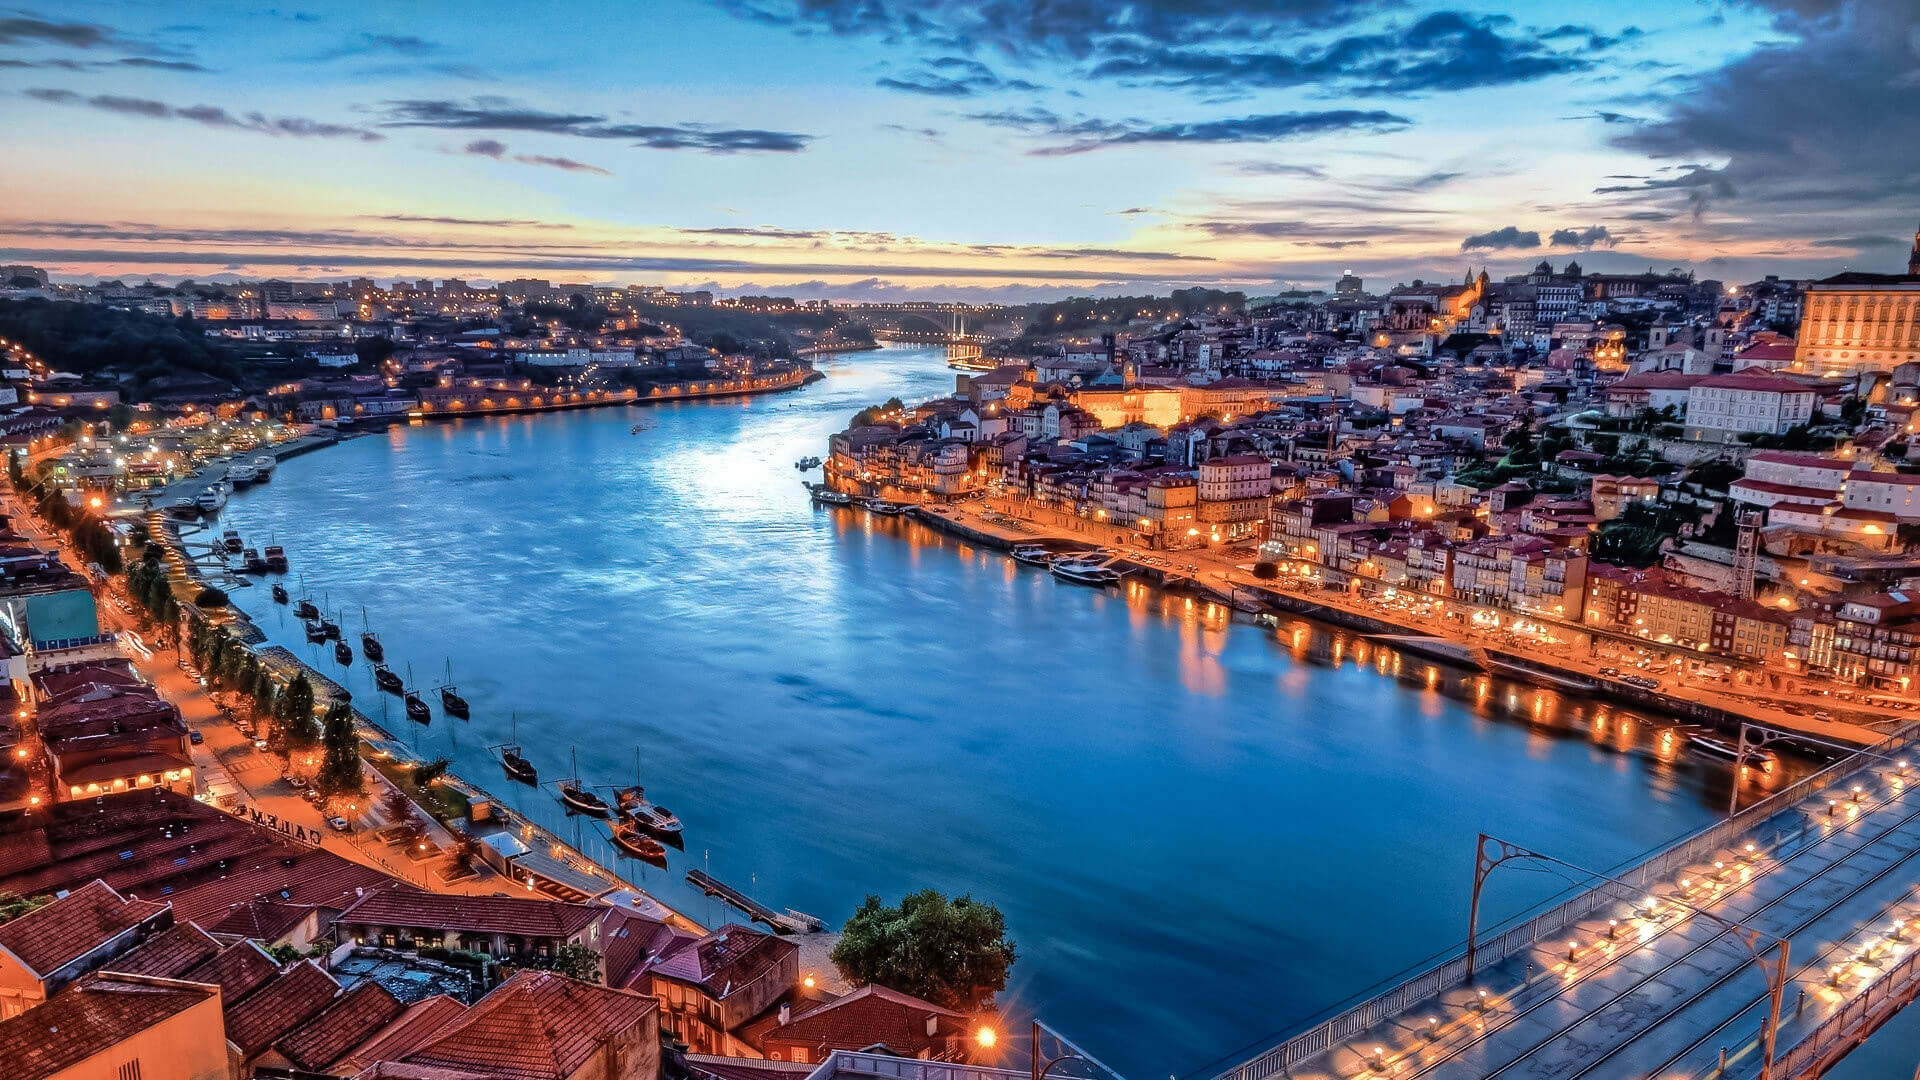 Portugal travel guide - Travel S helper